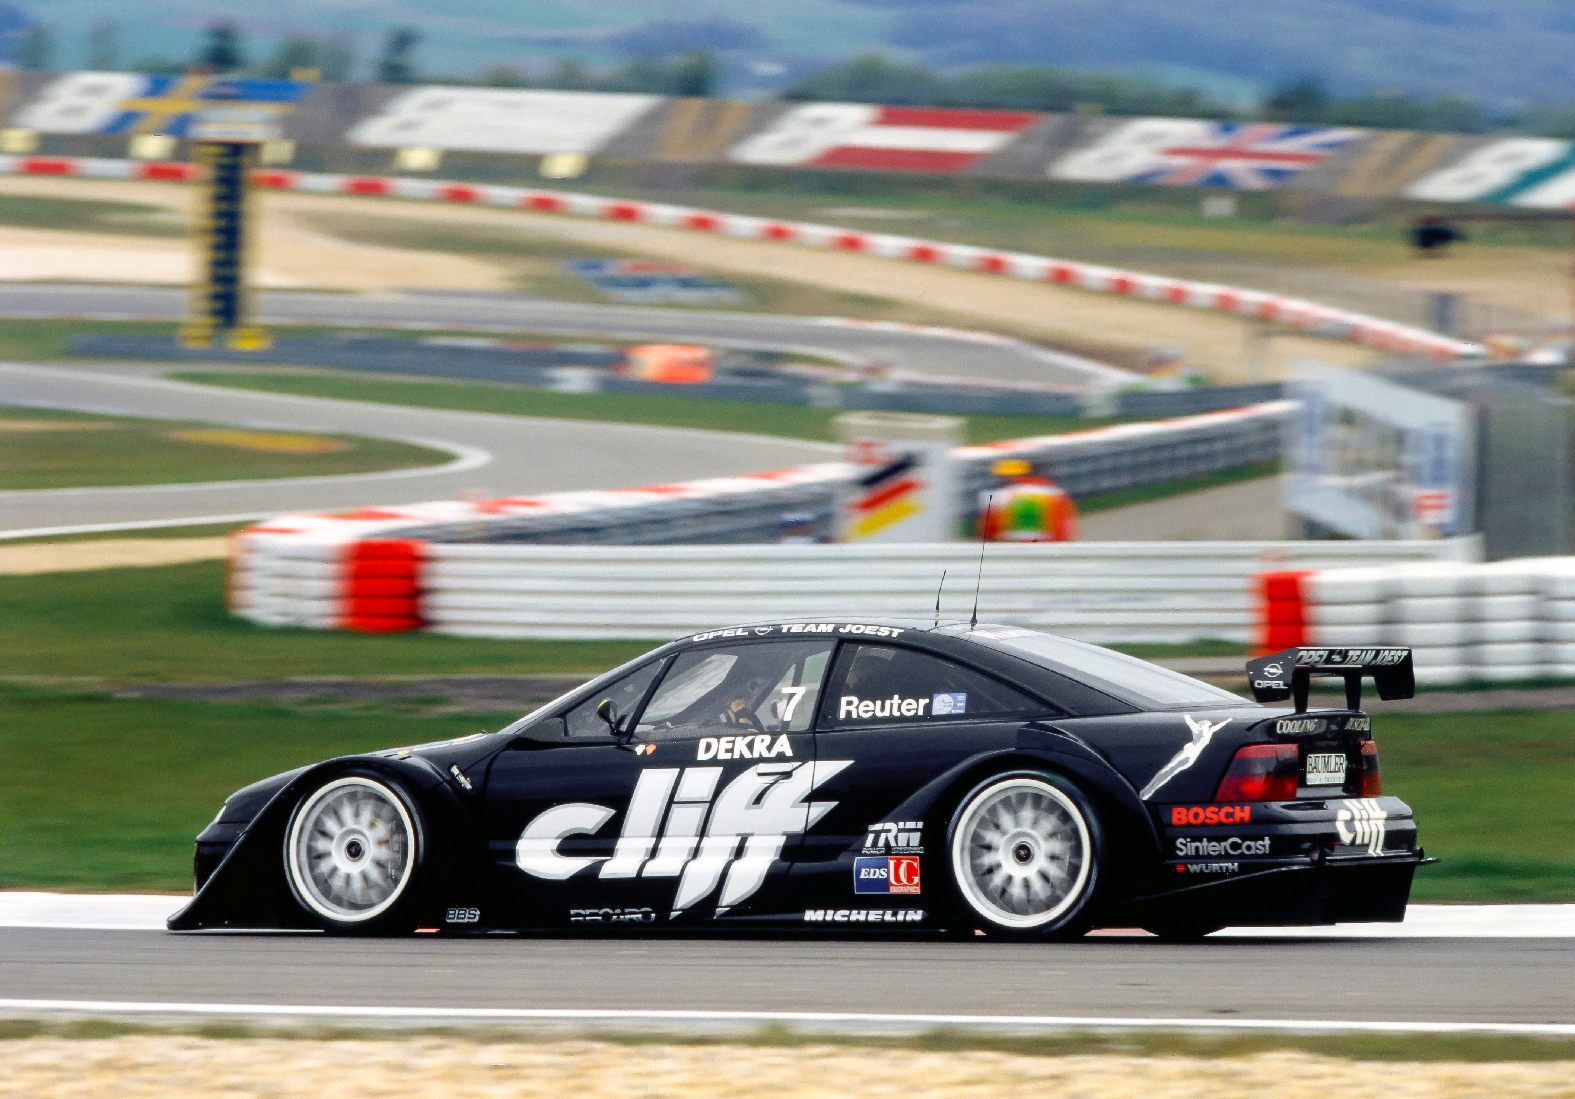 OPEL Calibra v6 ITC 1996 CHAMPION Set Manuel Reuter Motorsport da corsa con pin 